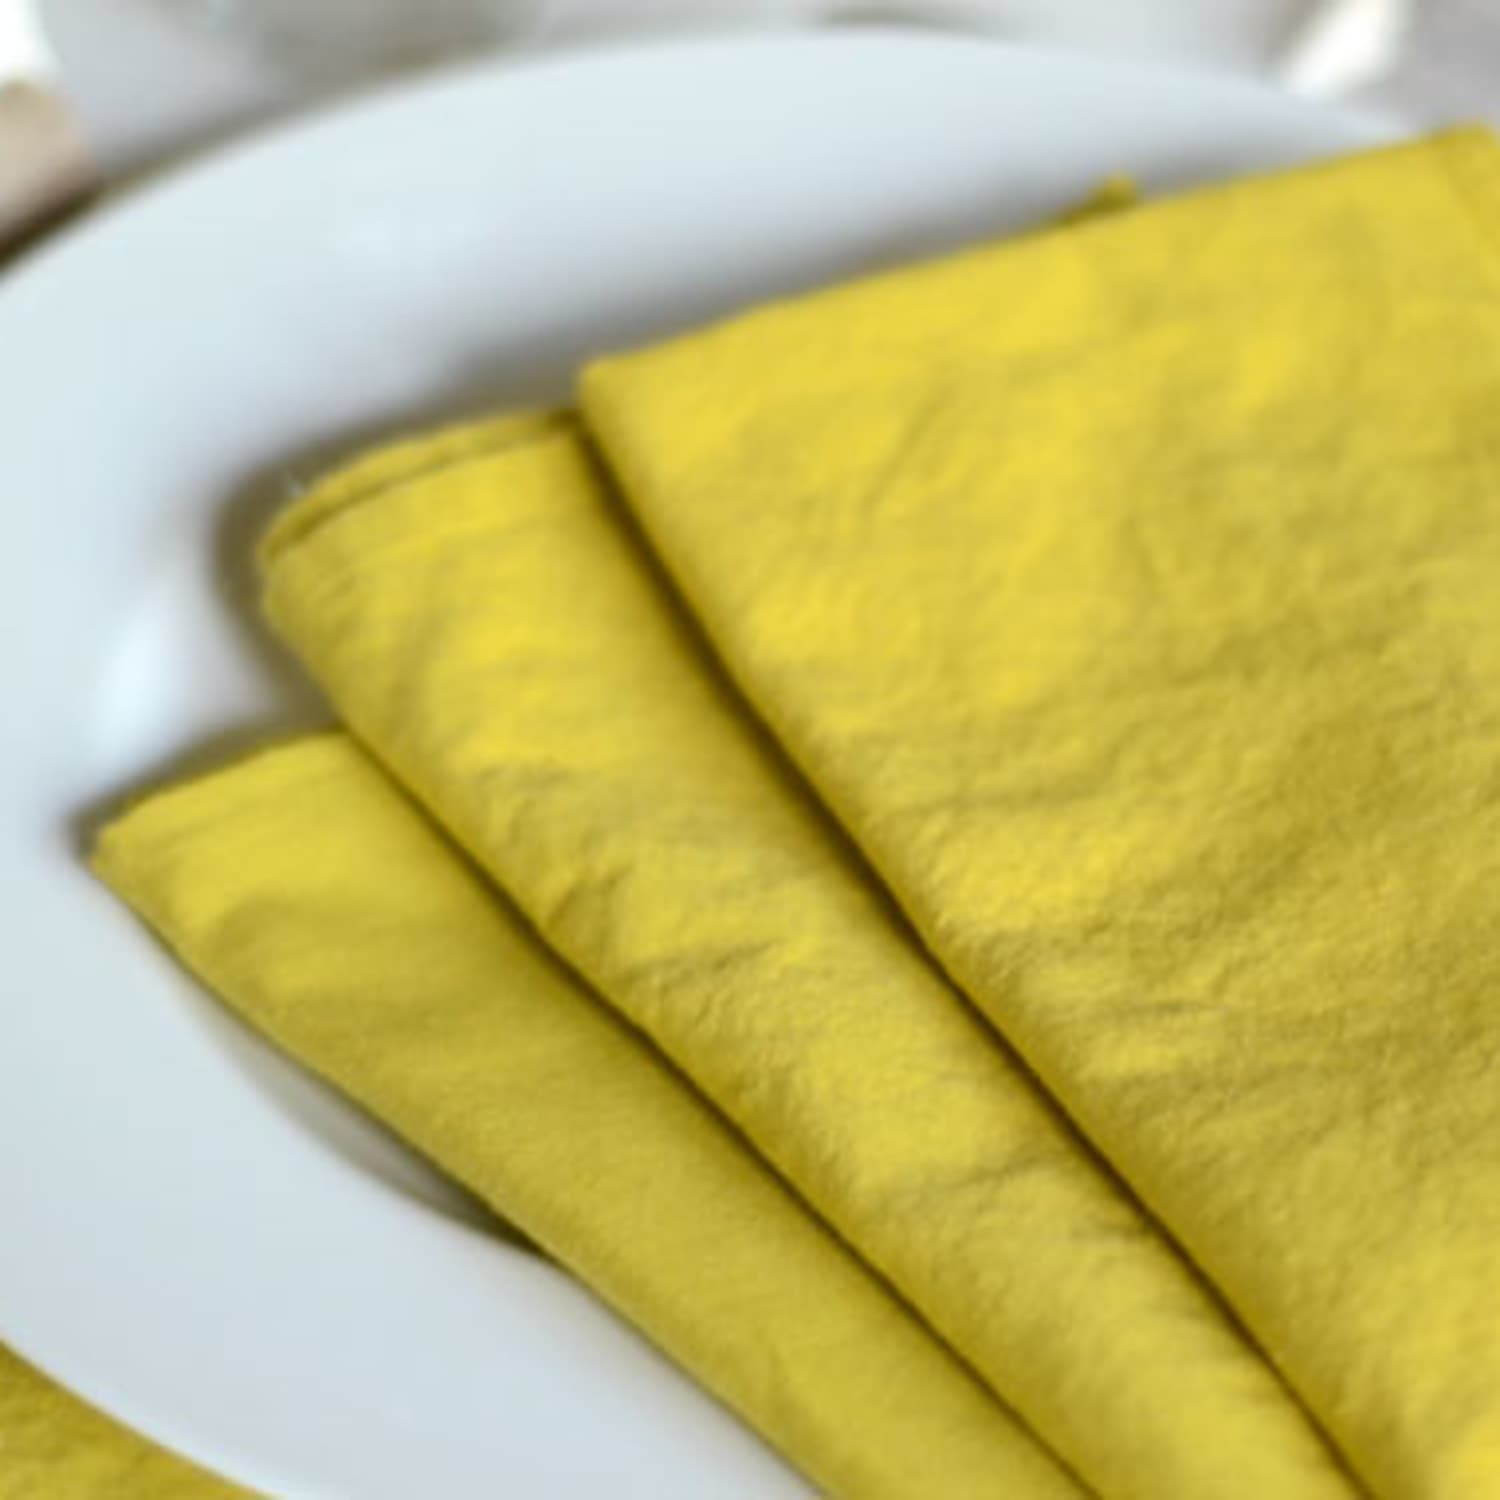 How Often Should You Wash Cloth Napkins?